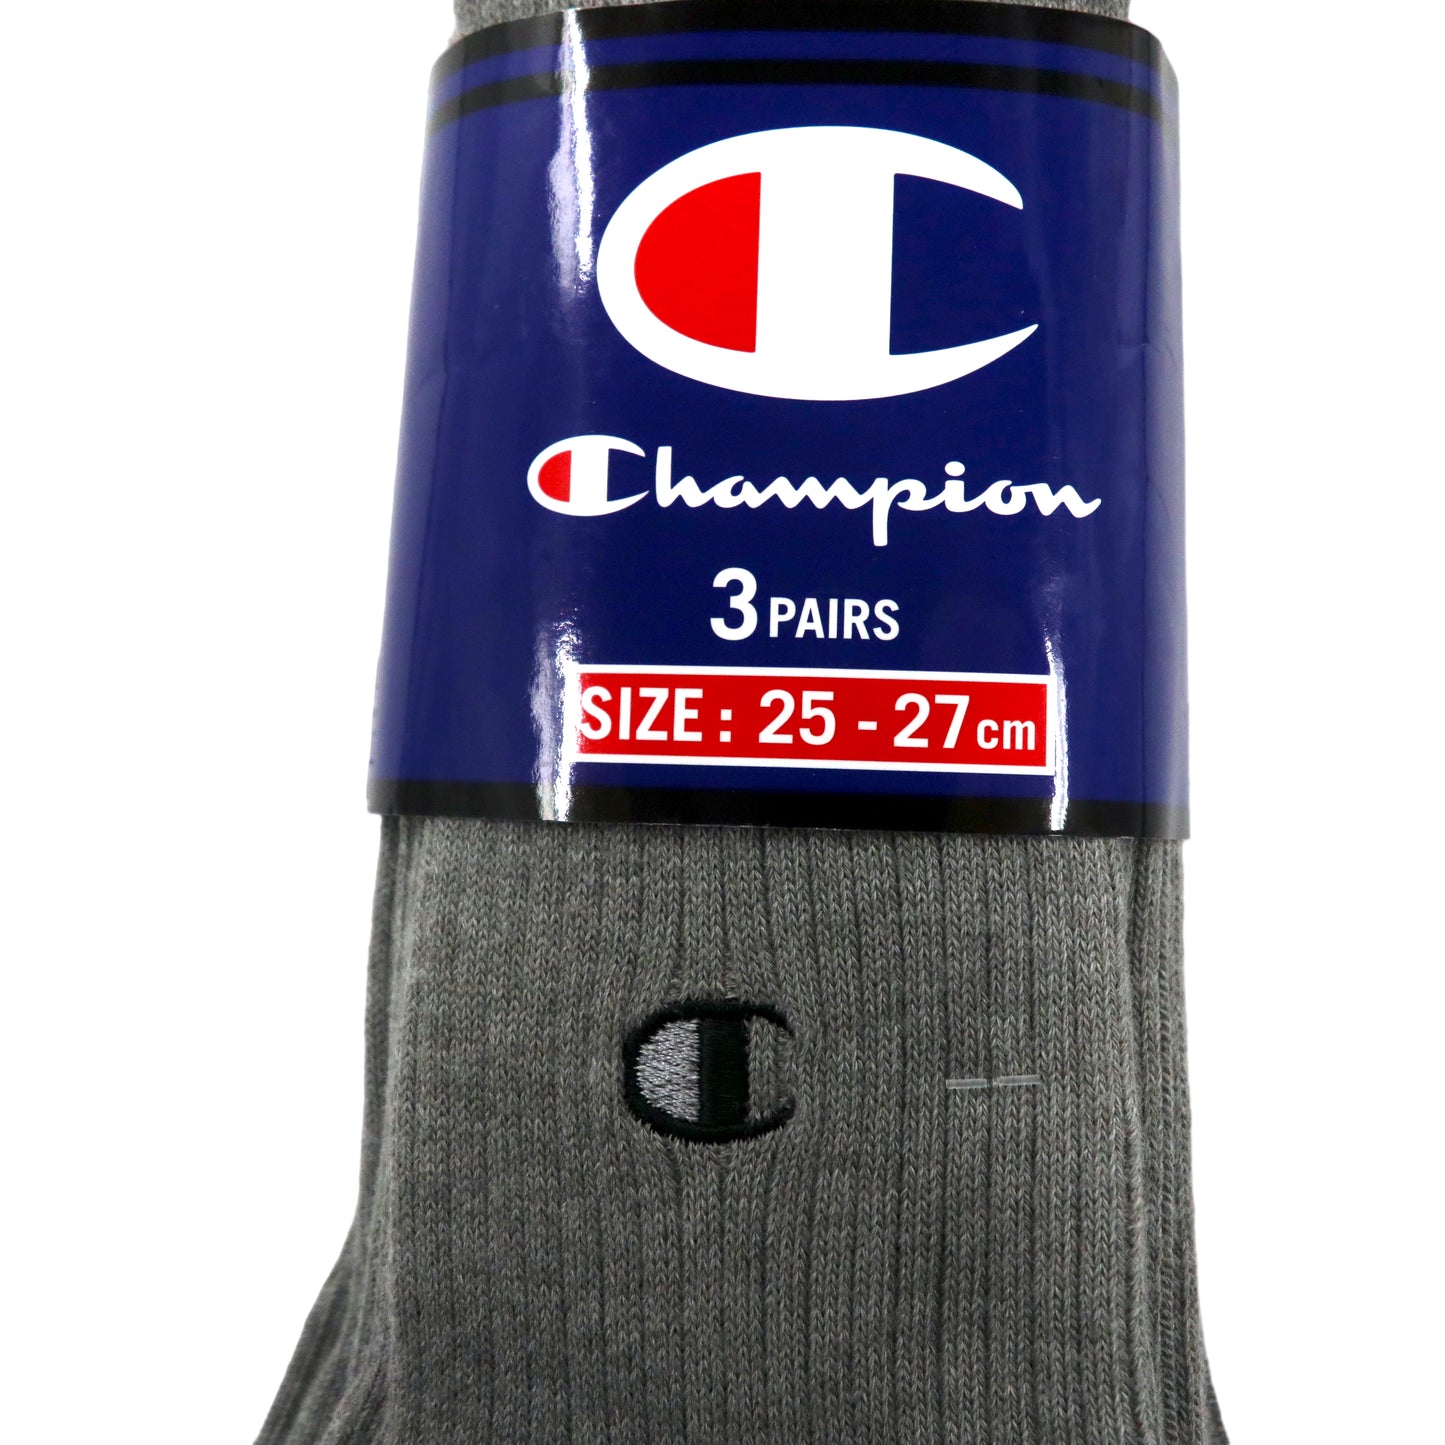 Champion 3足セット 靴下 ハイソックス 25-27cm グレー 3PAIRS 未使用品